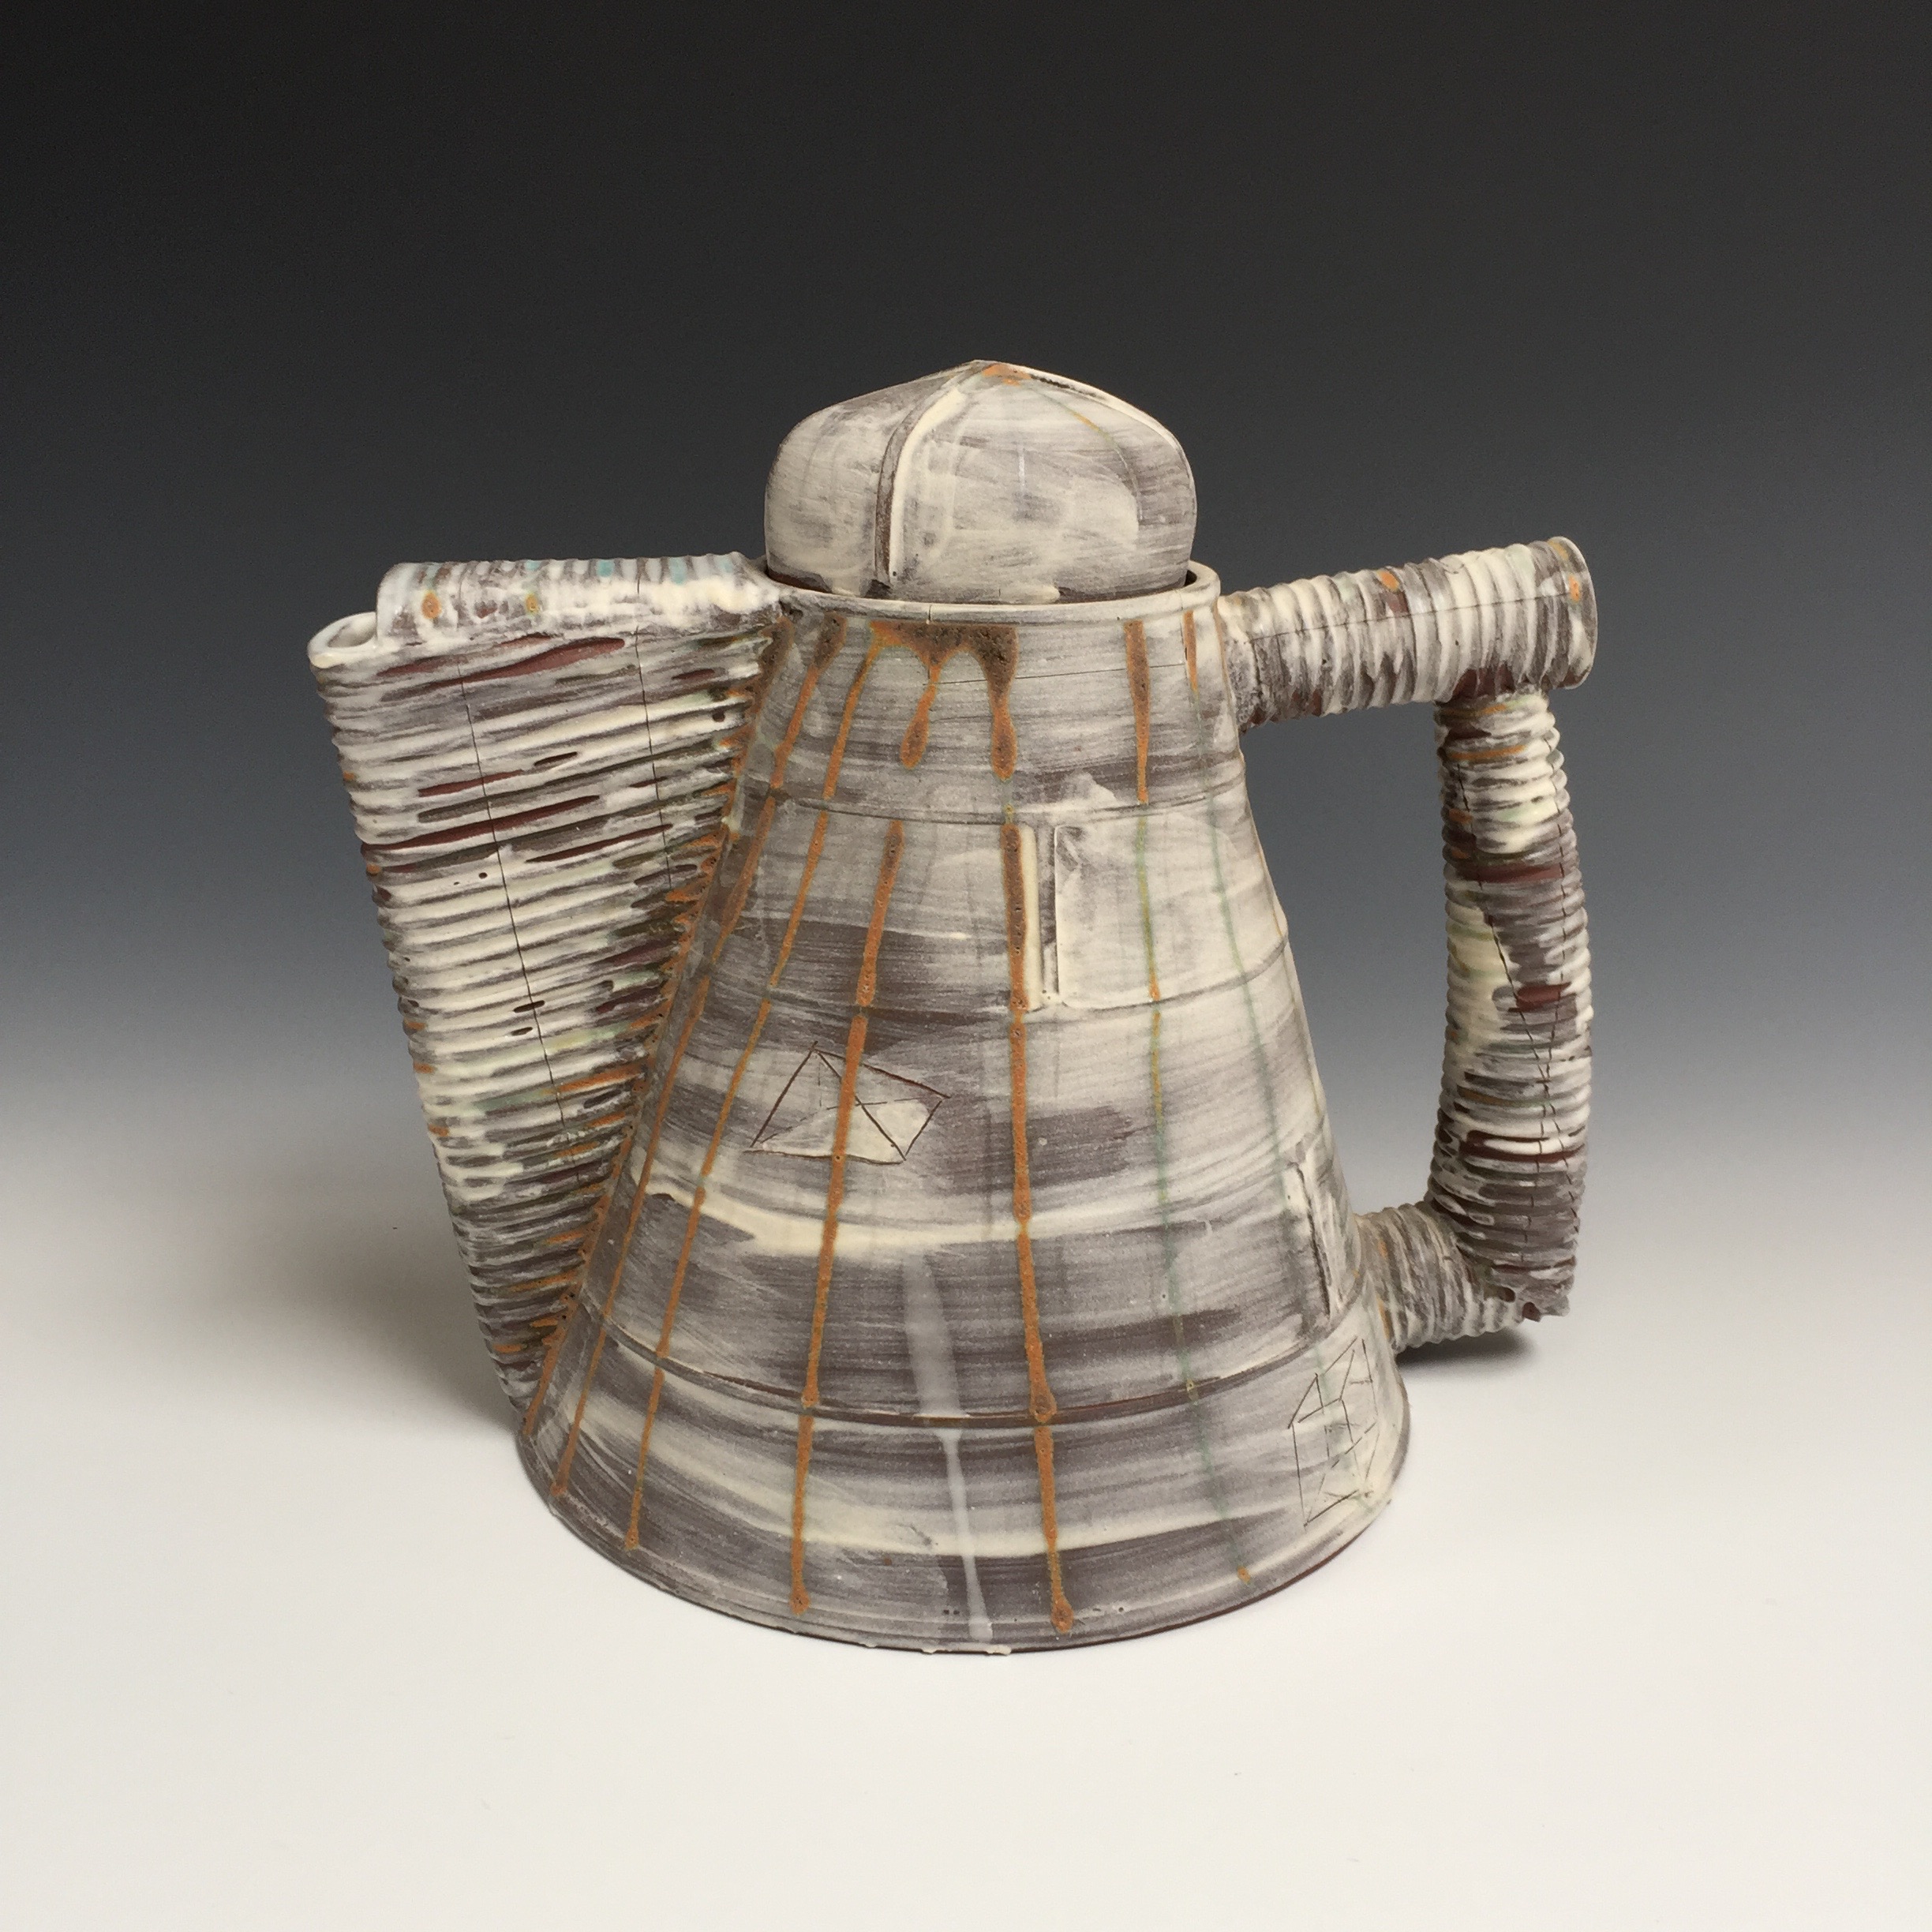 Ceramics - Anderson Ranch Arts Center